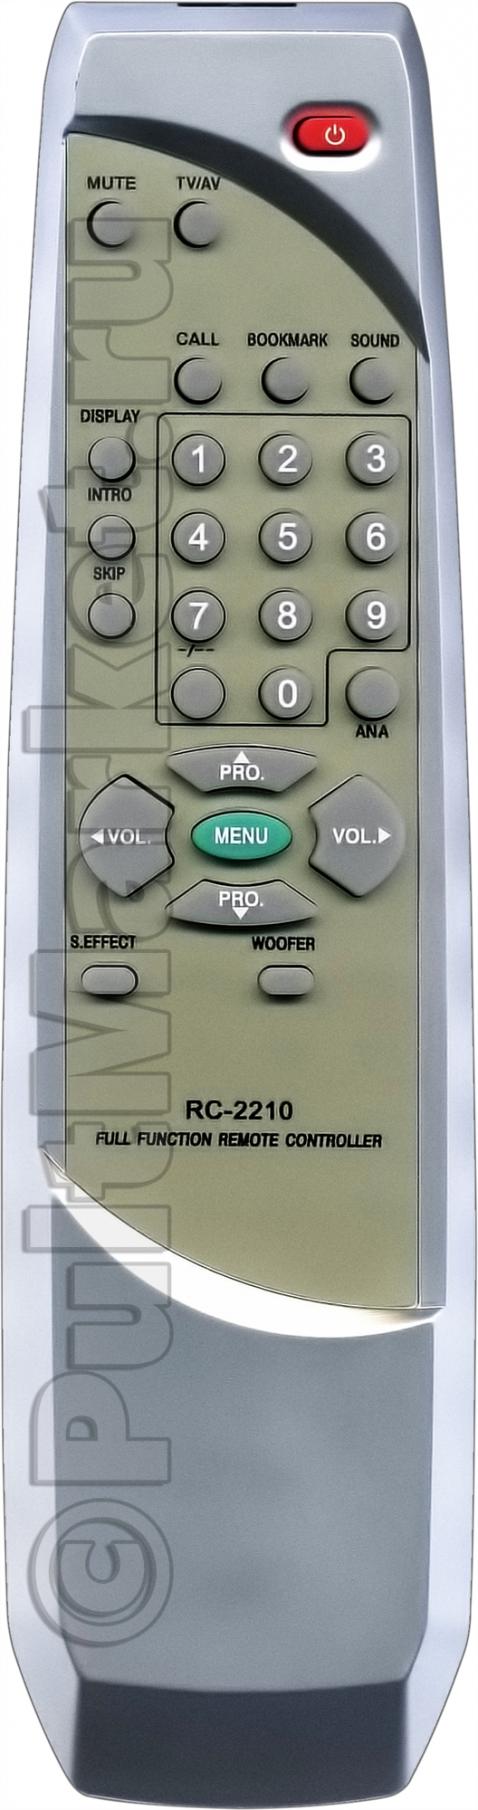 Пульт для Polar RC-2201 / TV-29B24